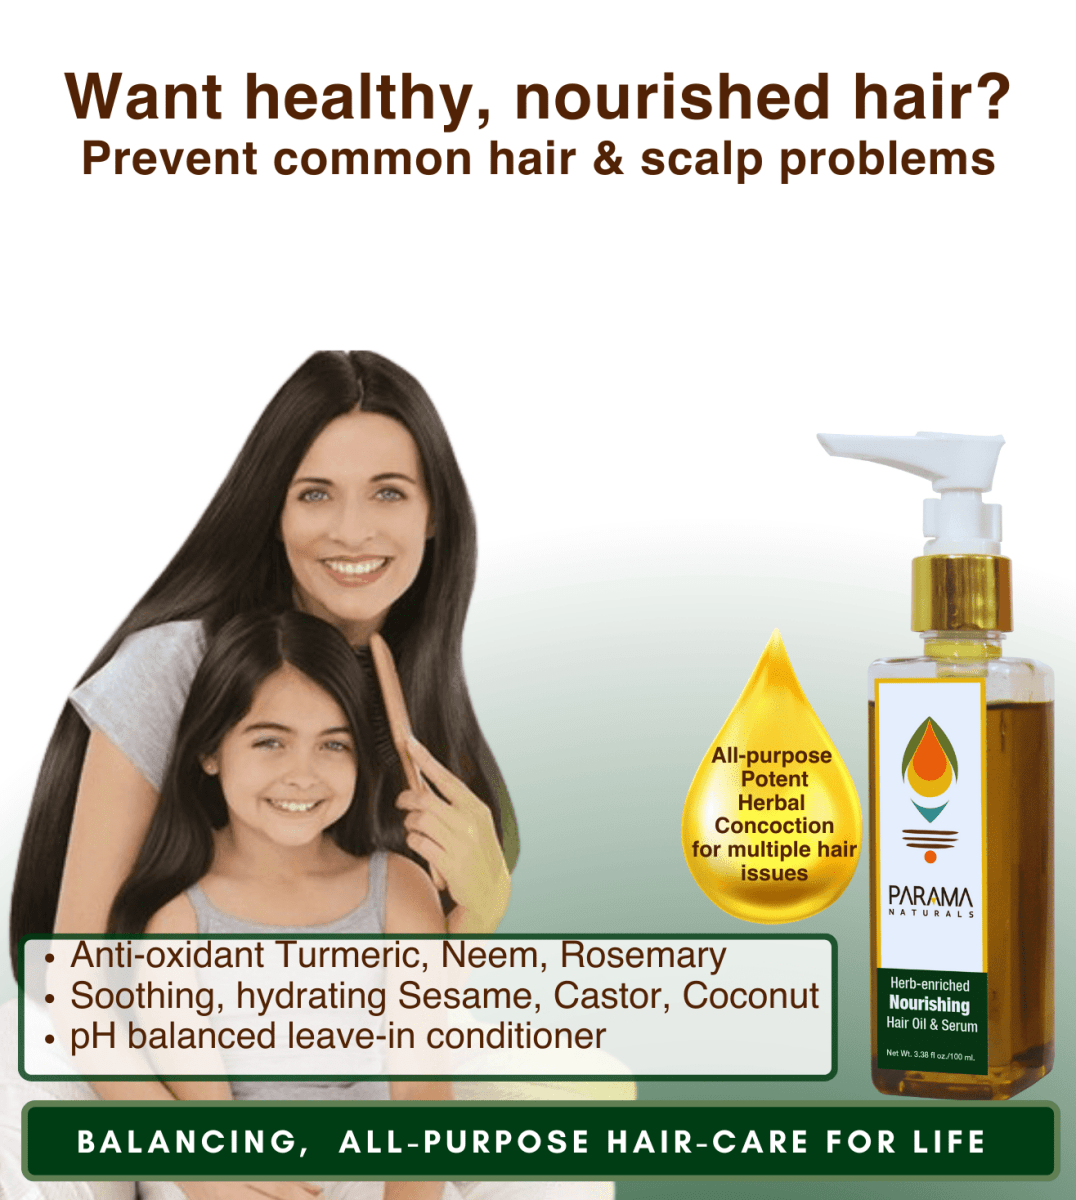 Parama Naturals Nourishing Hair Oil (Serum) - 41116